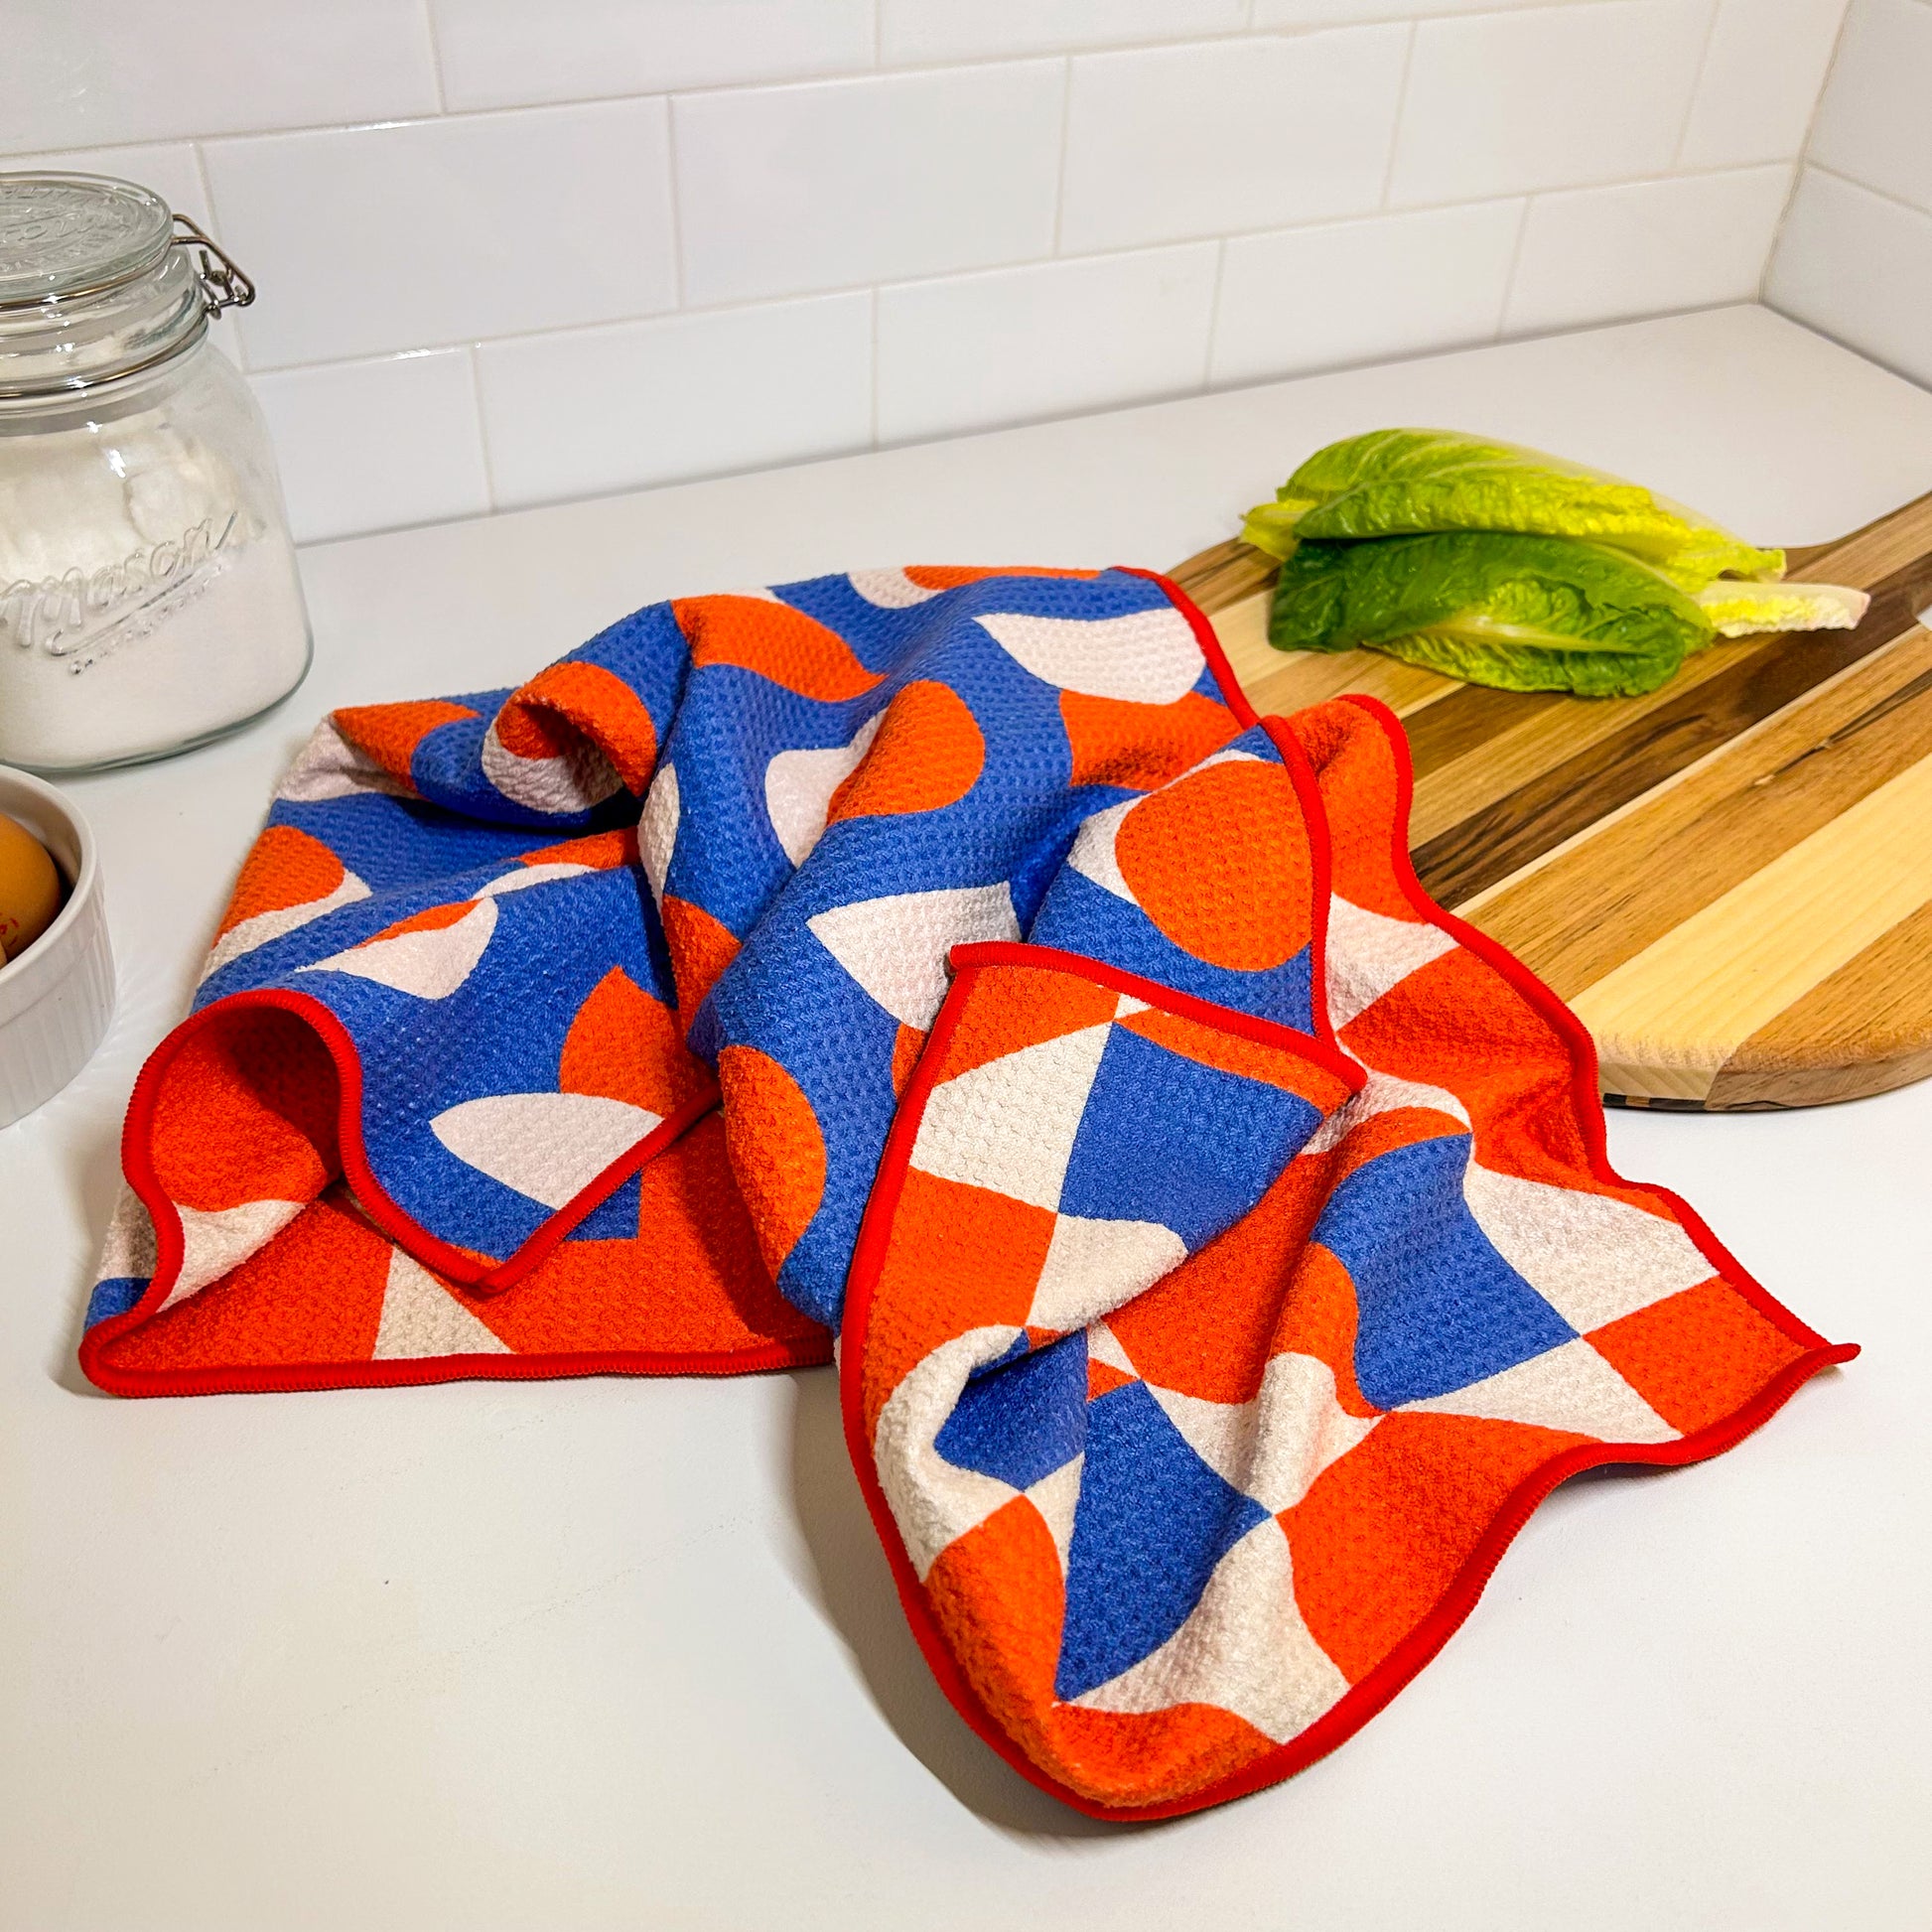 Retro Blue - Kitchen Dish Towel & Hand towel